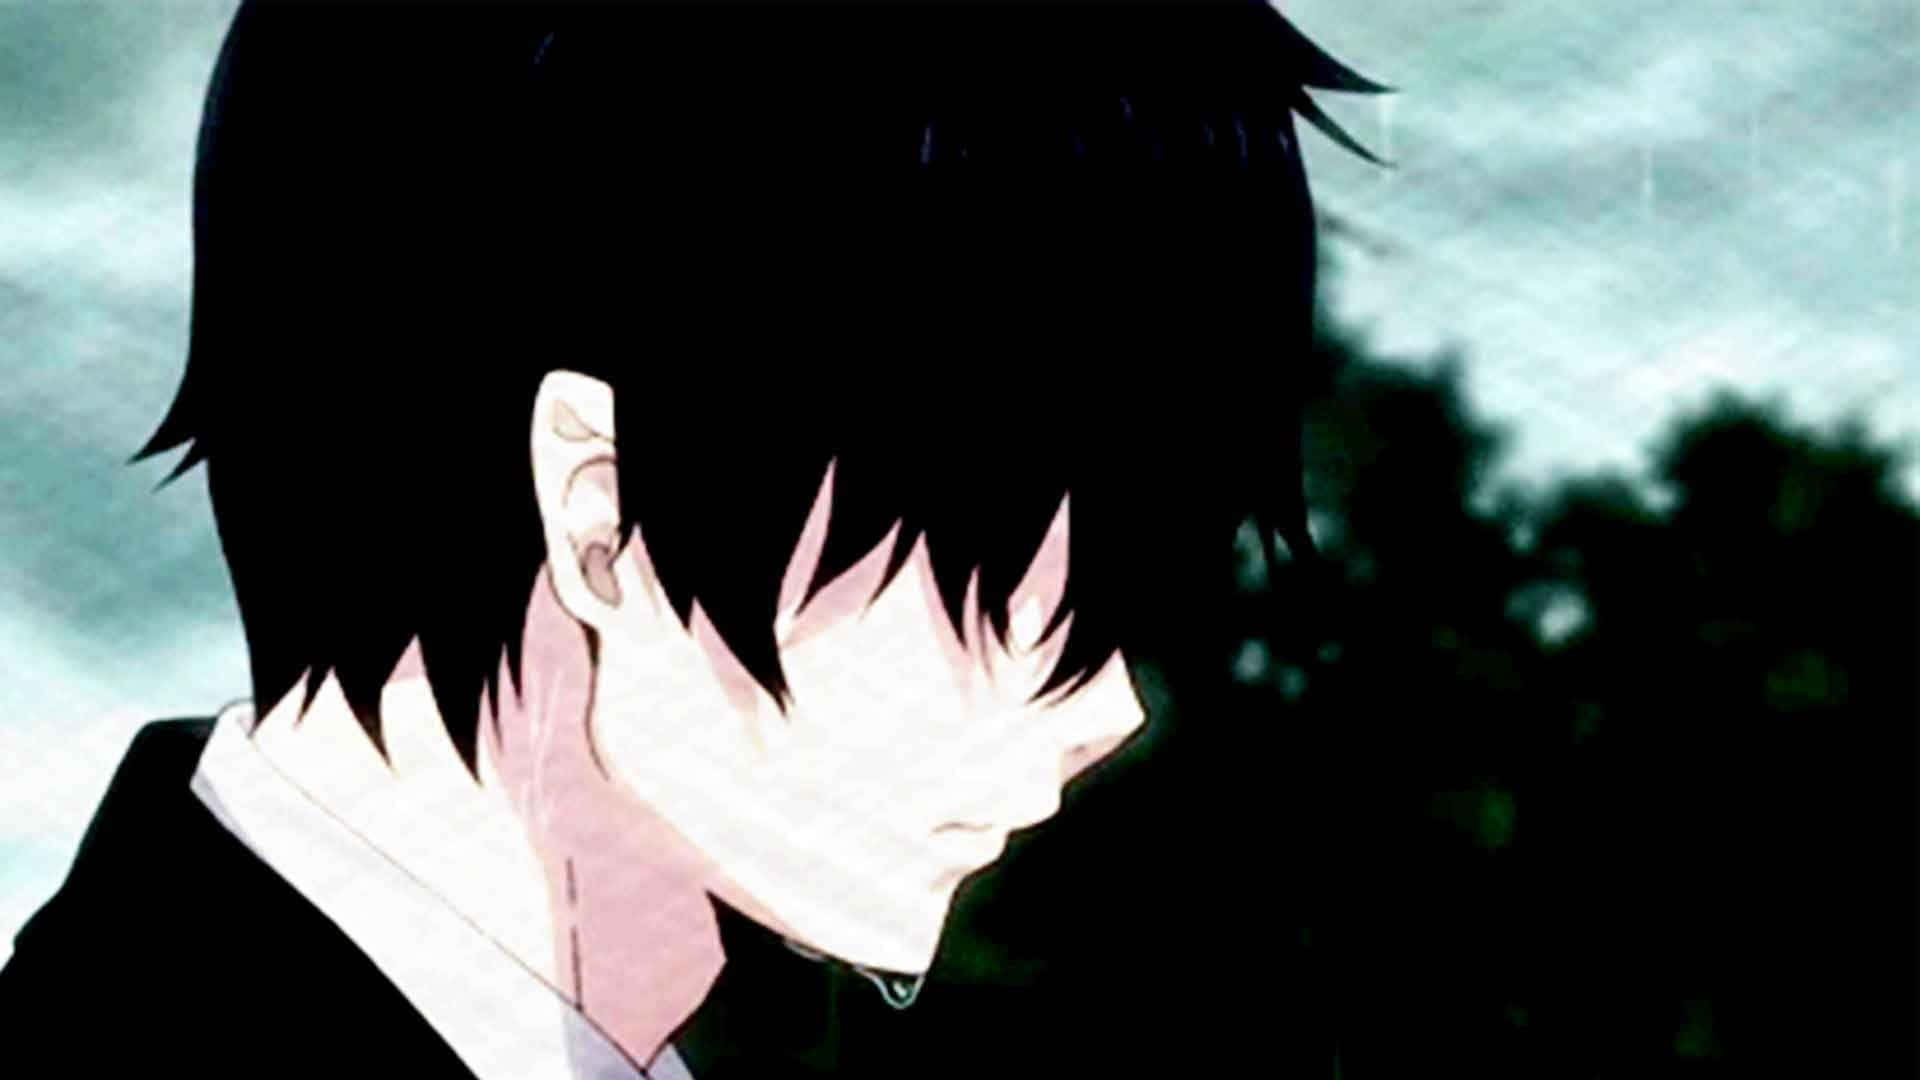 Download Depressed Anime Boy Wallpaper | Wallpapers.com